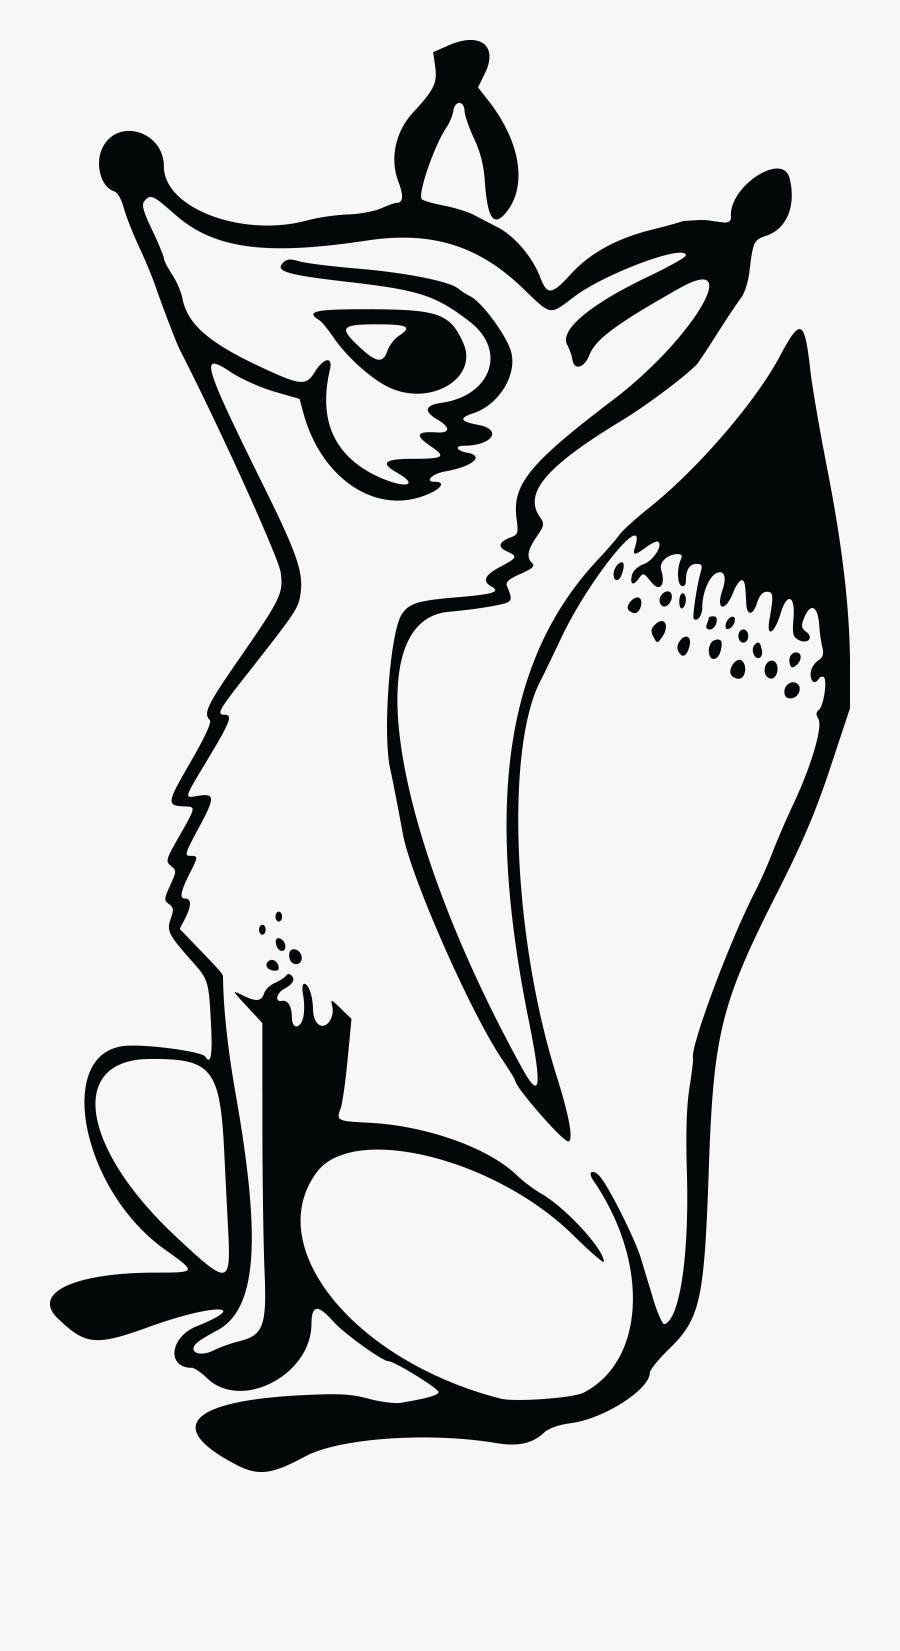 Free Clipart - Cartoon Fox Clipart Black And White, Transparent Clipart